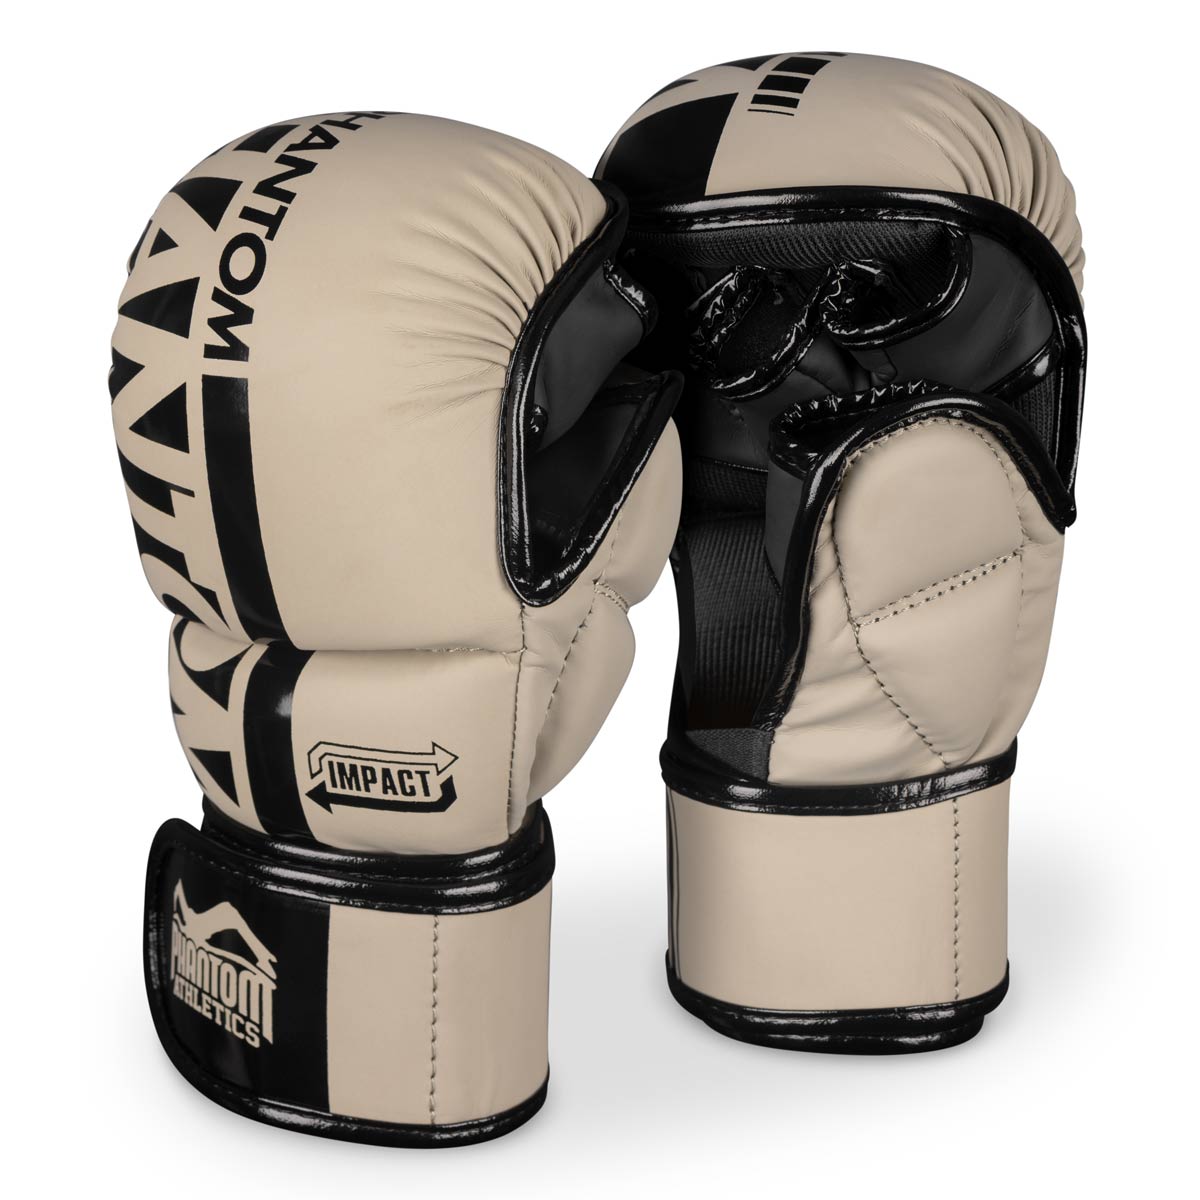 Phantom Apex MMA Sparringshandschuhe für Kampfsport